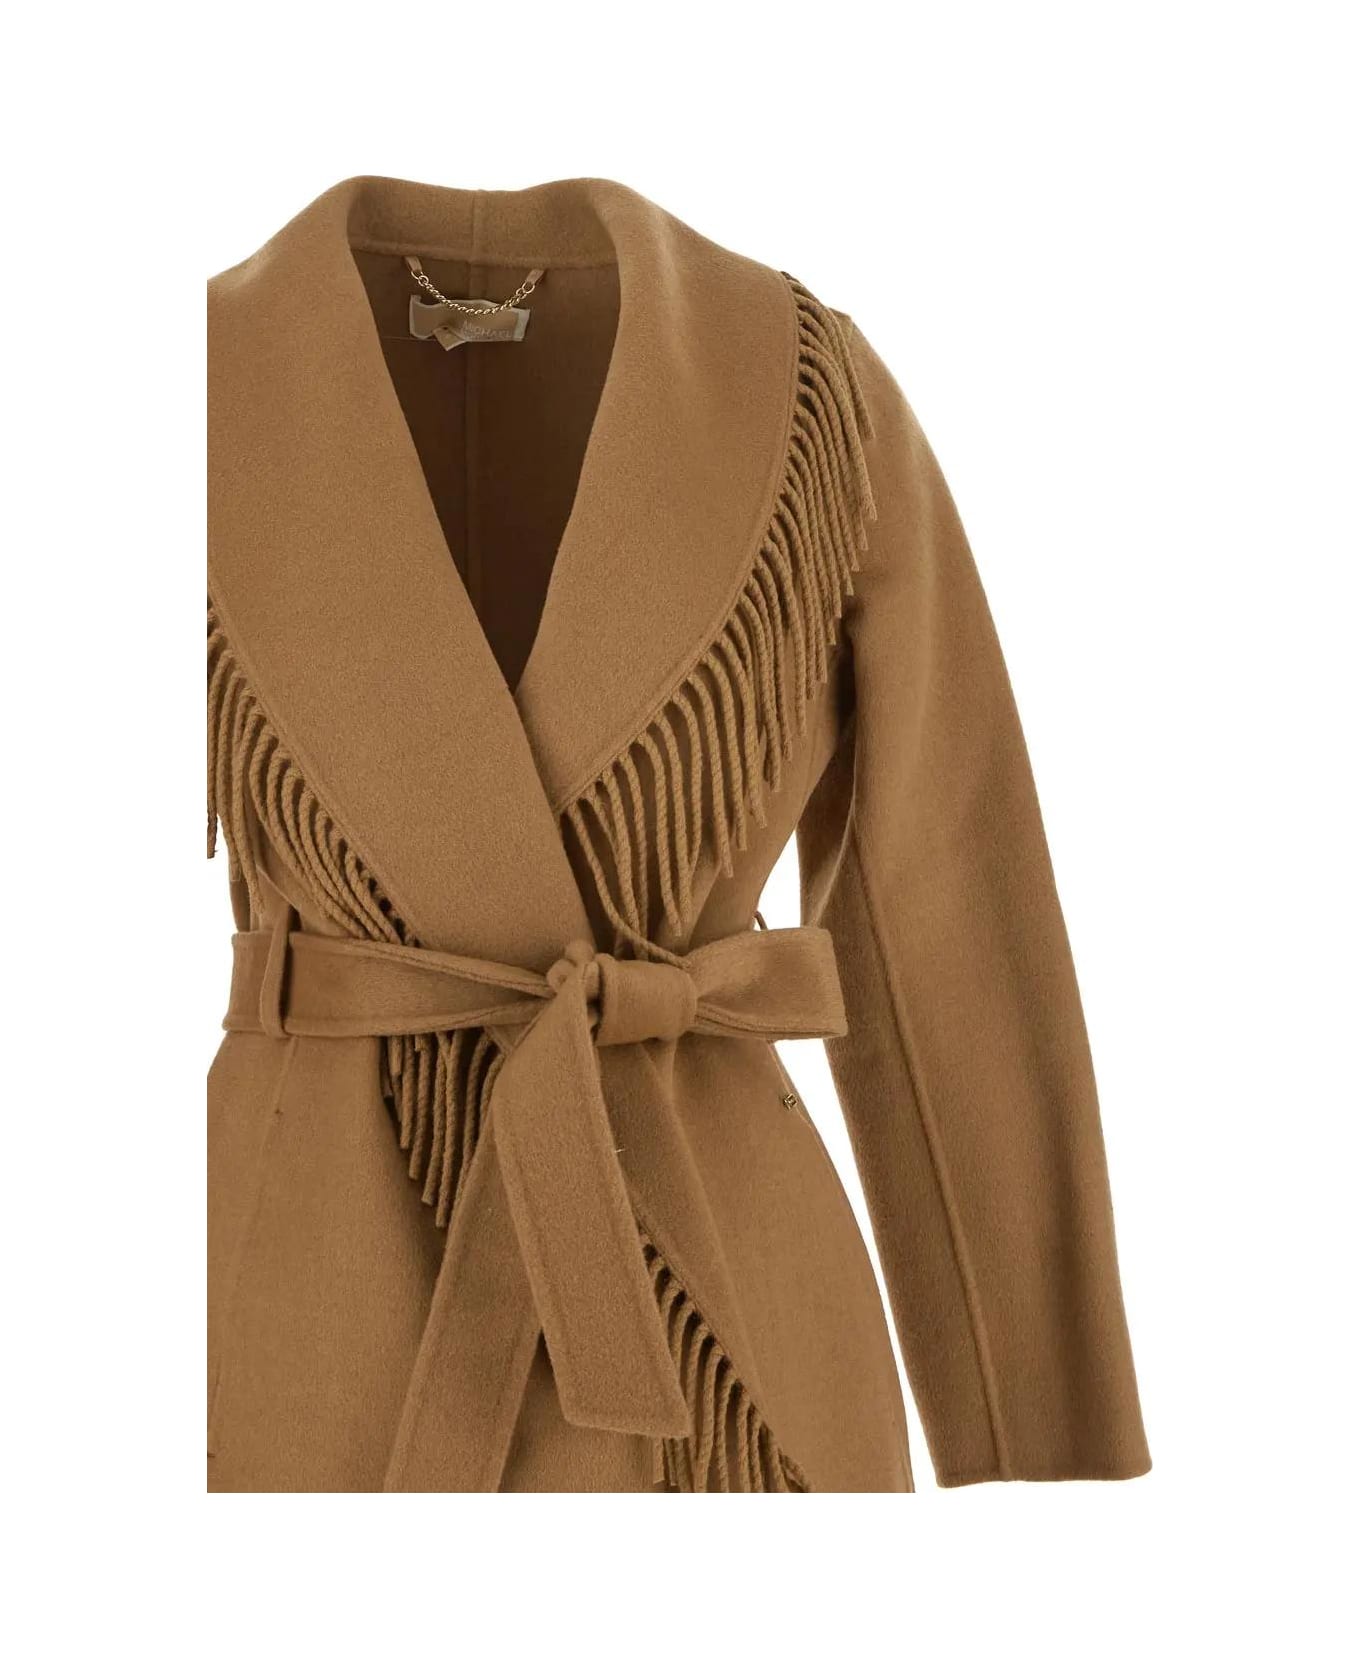 Michael Kors Collection Wool Fringed Coat - Dark Camel